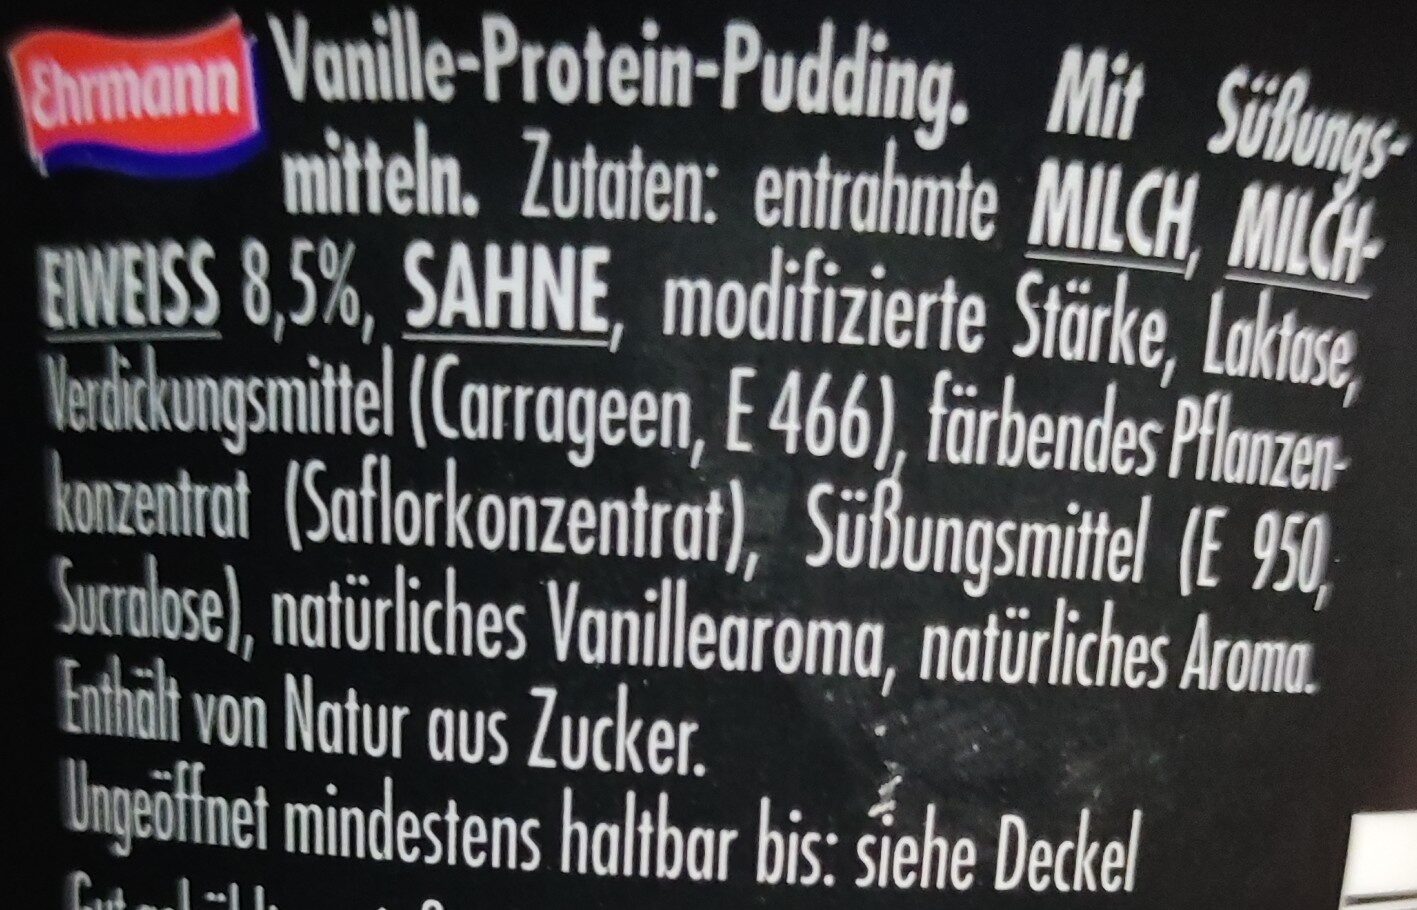 High Protein-Pudding - Vanilla - Ingredients - de